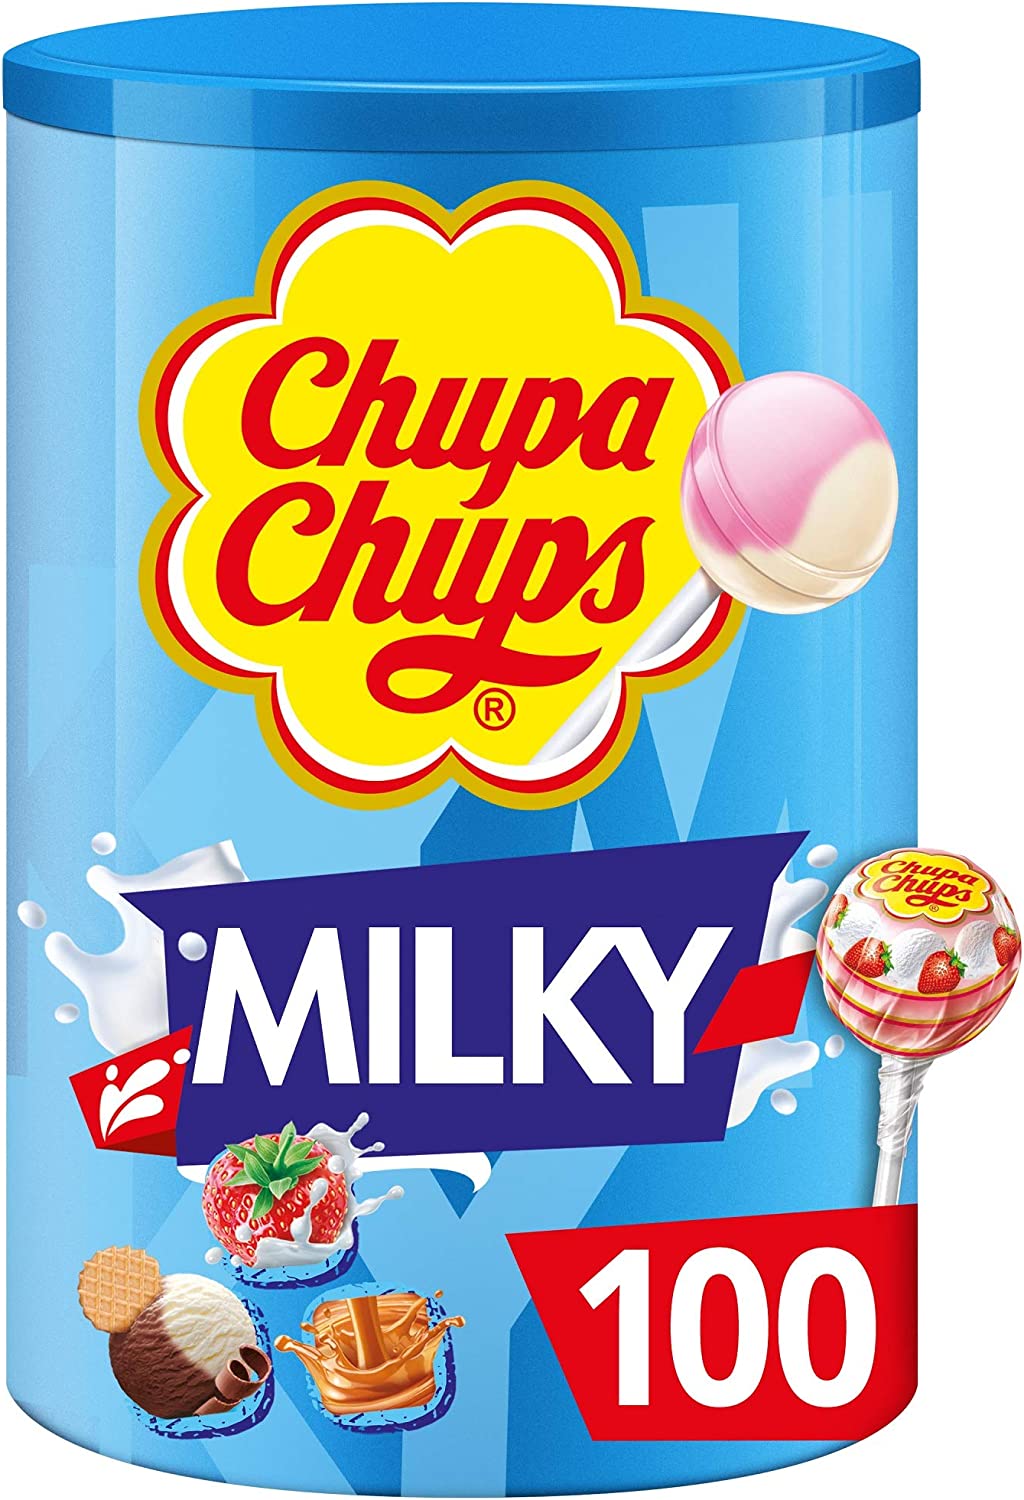 Chupa Chups milky